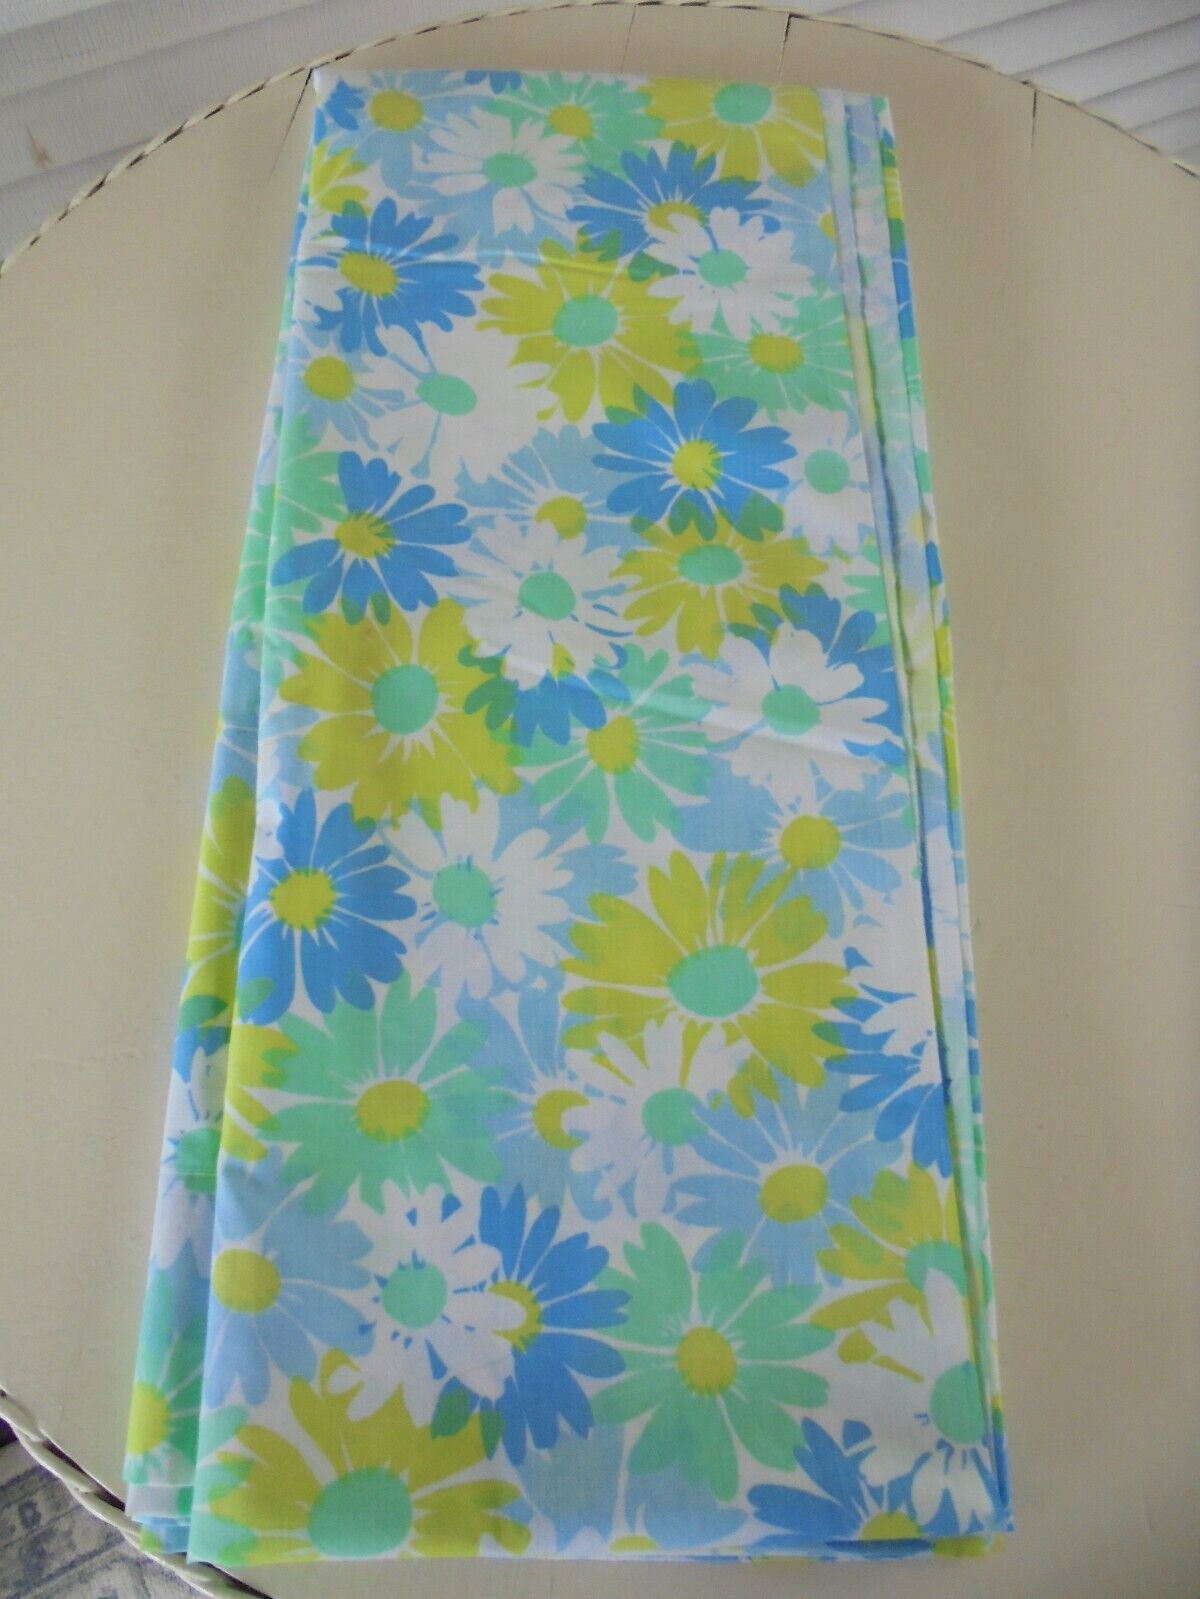 Vintage Floral Flat Sheet Flower Power Mod 70’s Green/Blue/White Daisy Pattern